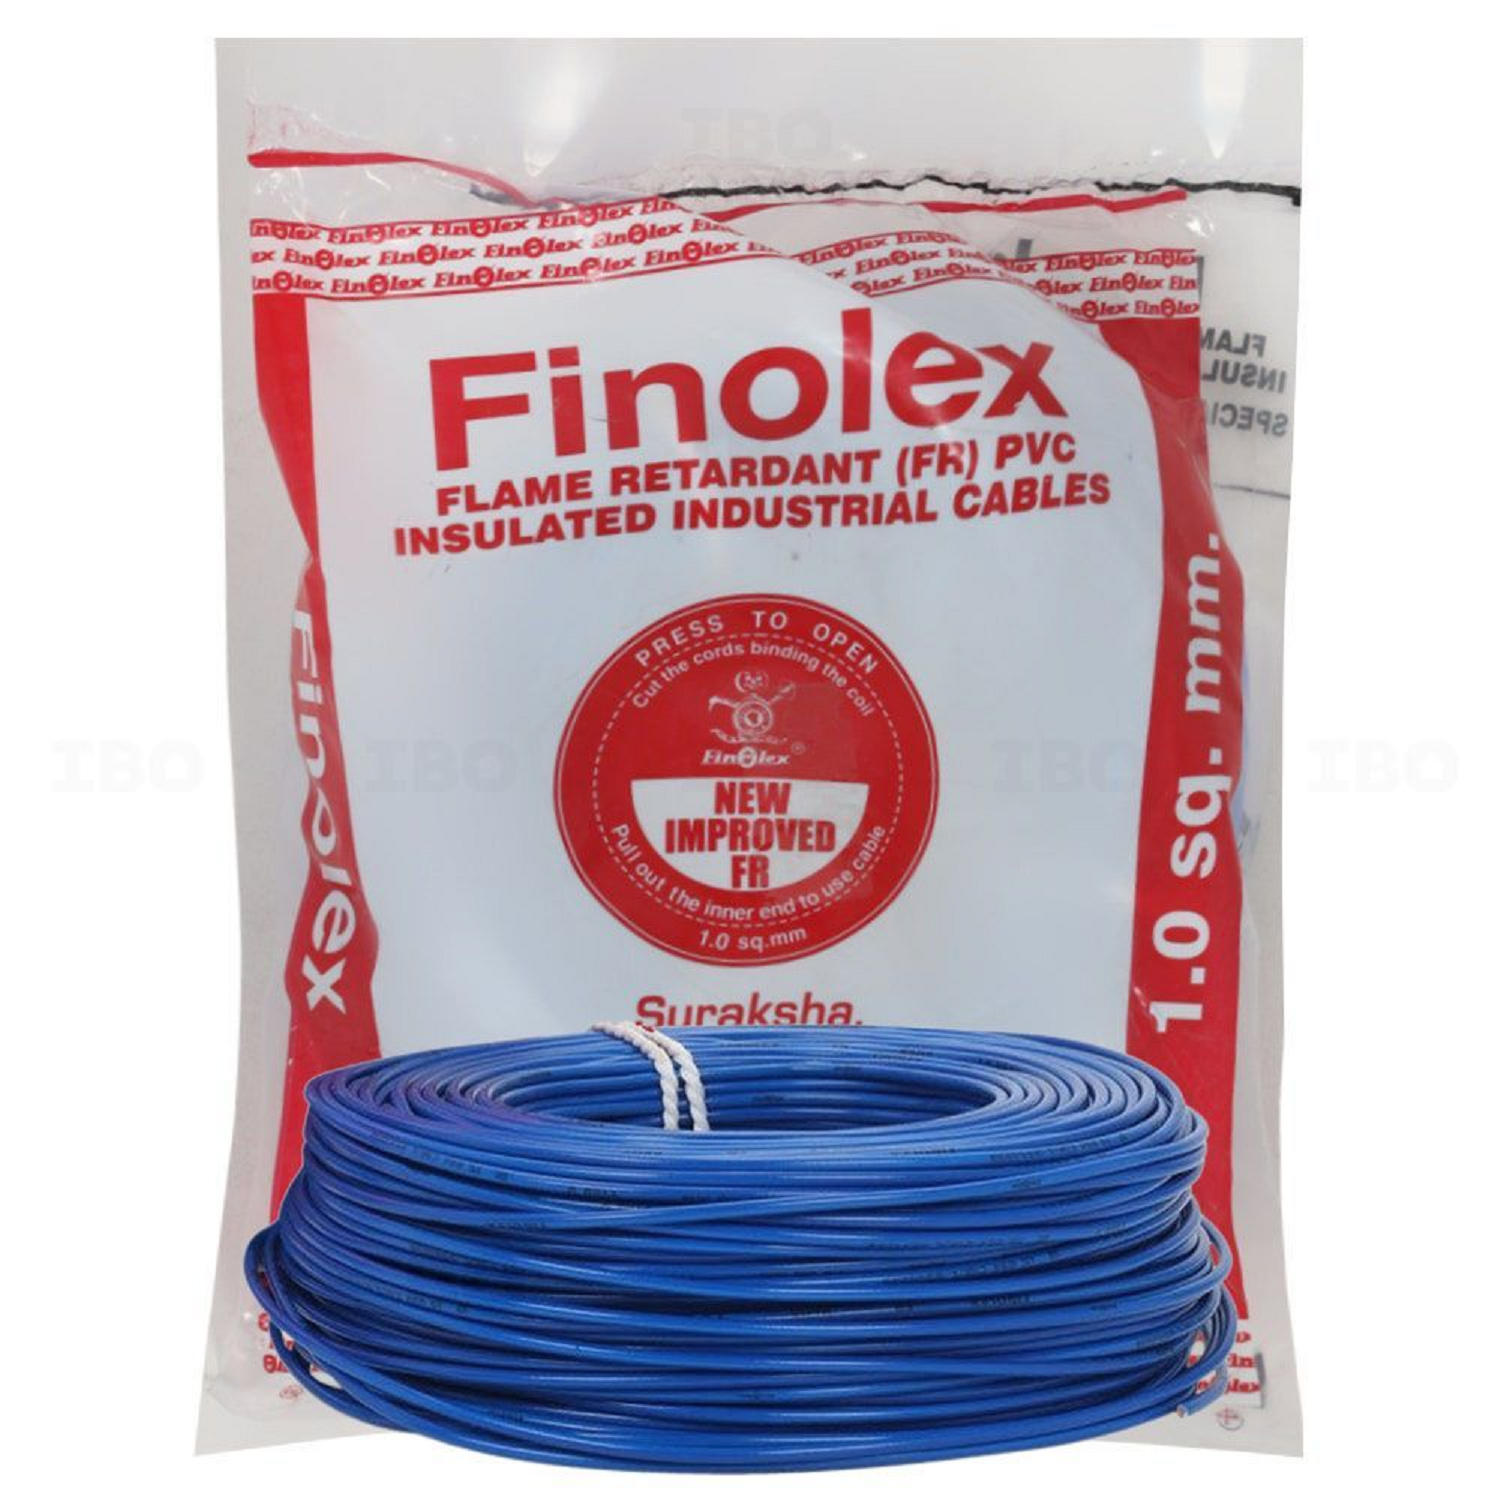 1.0 Sqmm Finolex FR Single Core Copper Wire (180 Mtr) With PVC Insulated for Domestic 38 Industrial 